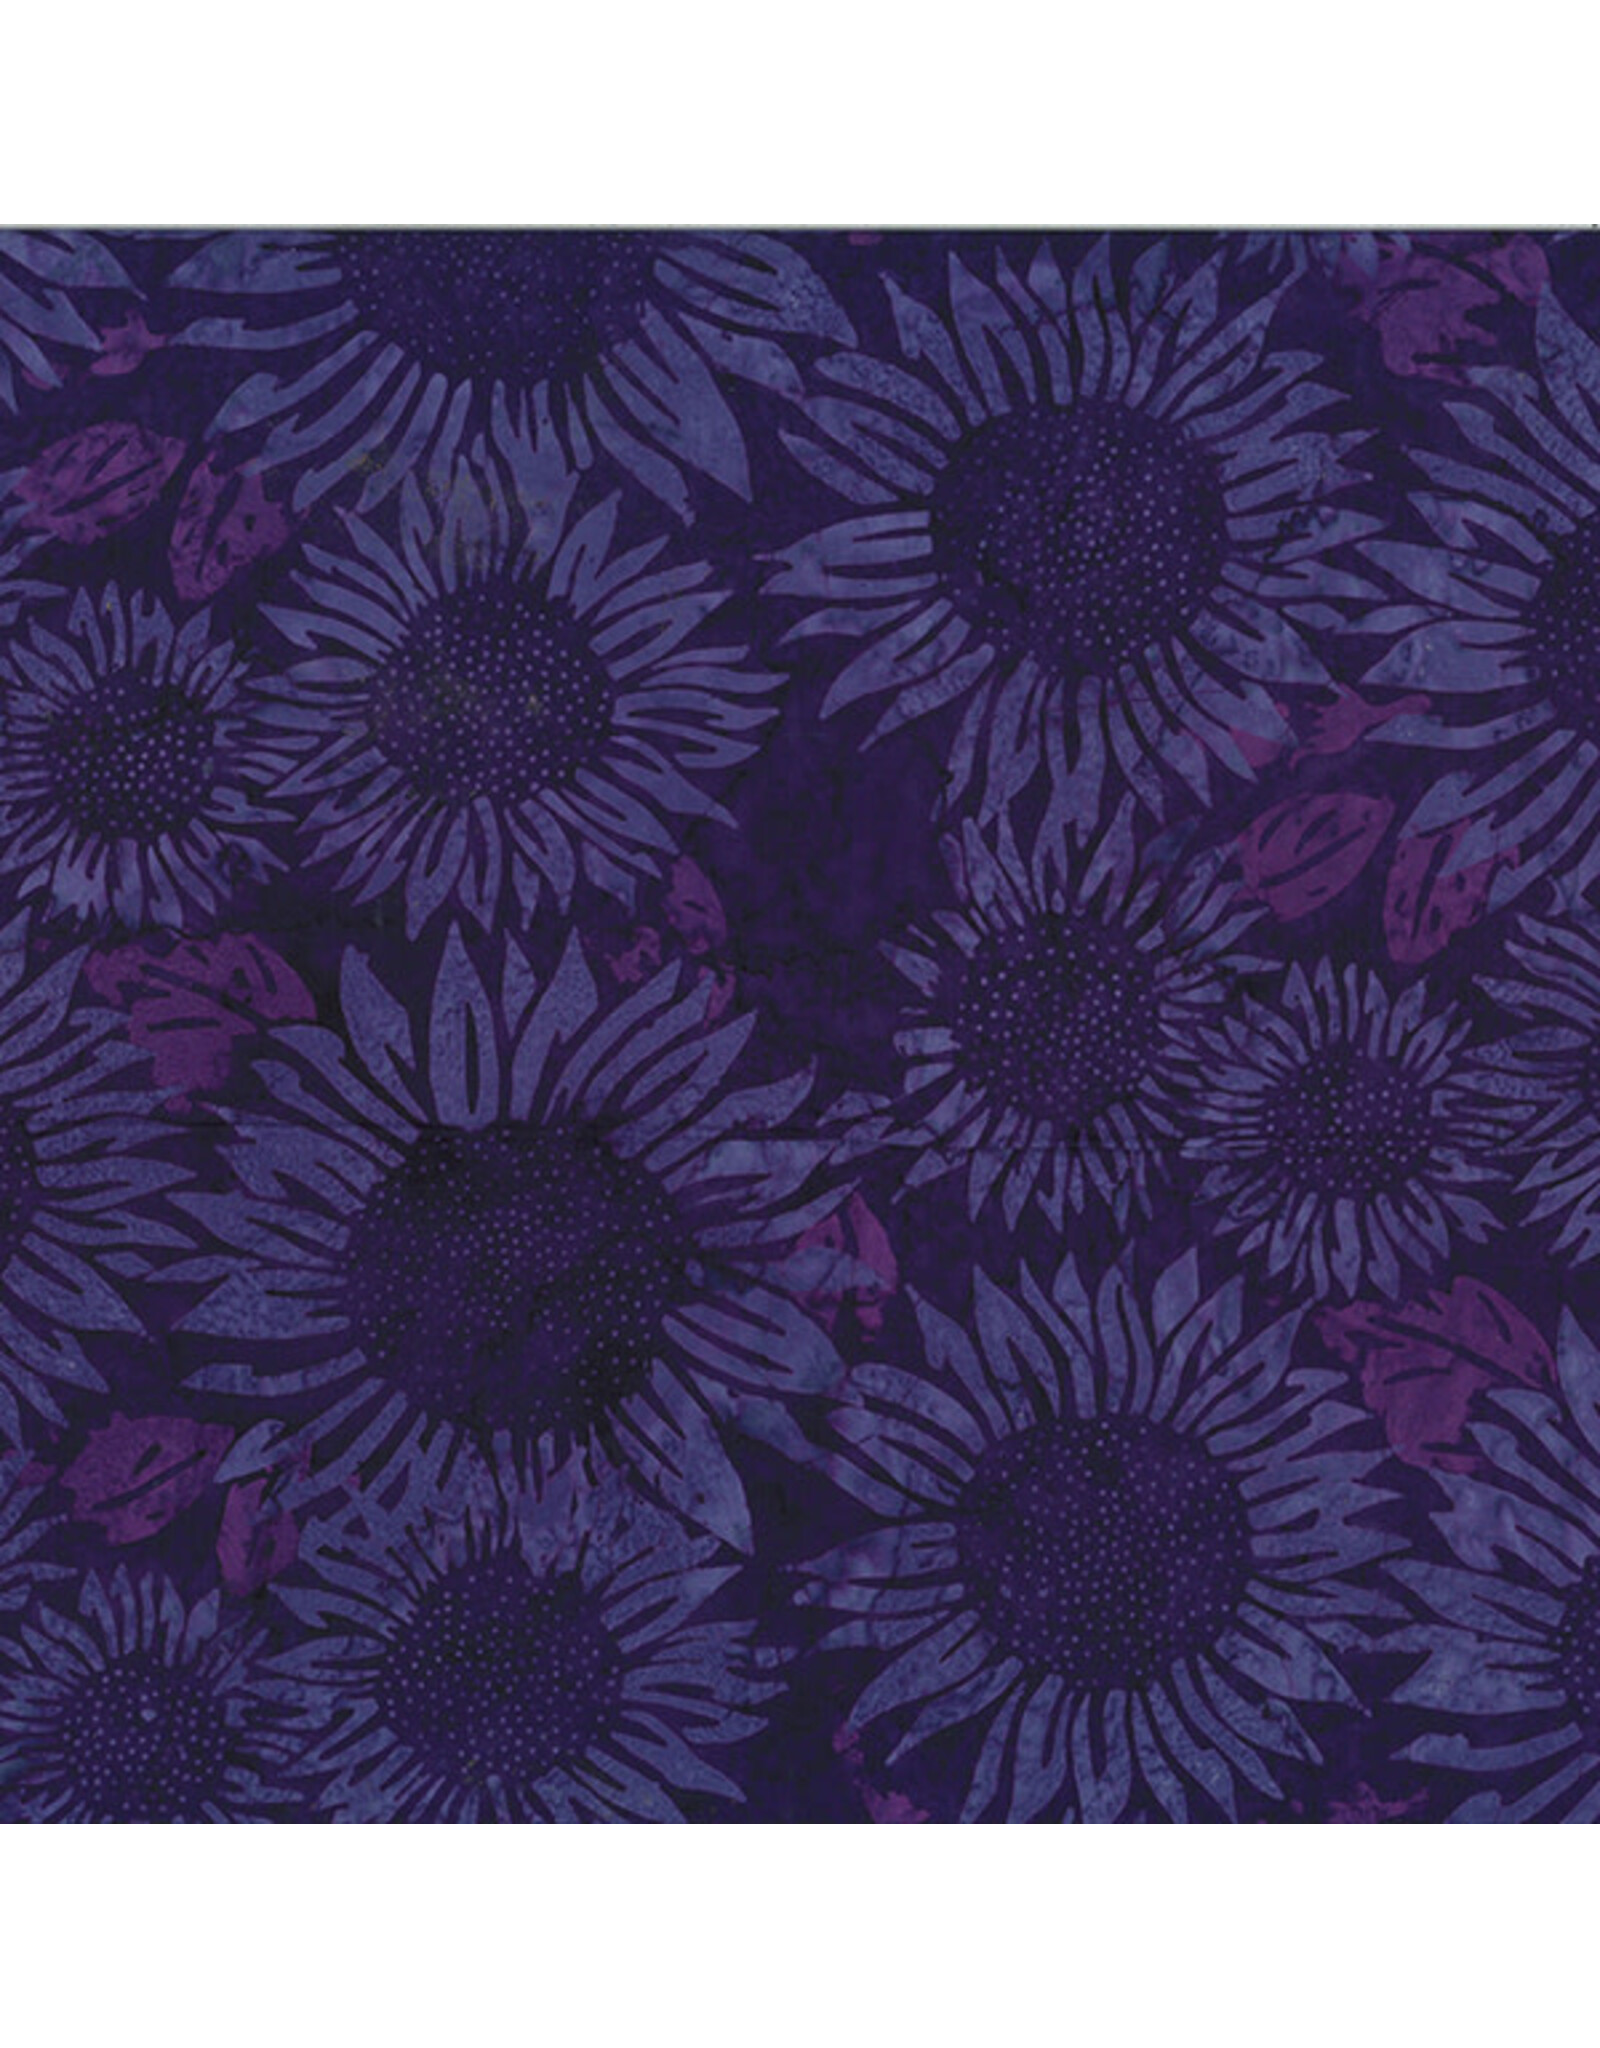 Batik Textiles – 0605 – Warm Violet Bali SunPrints – Specialty